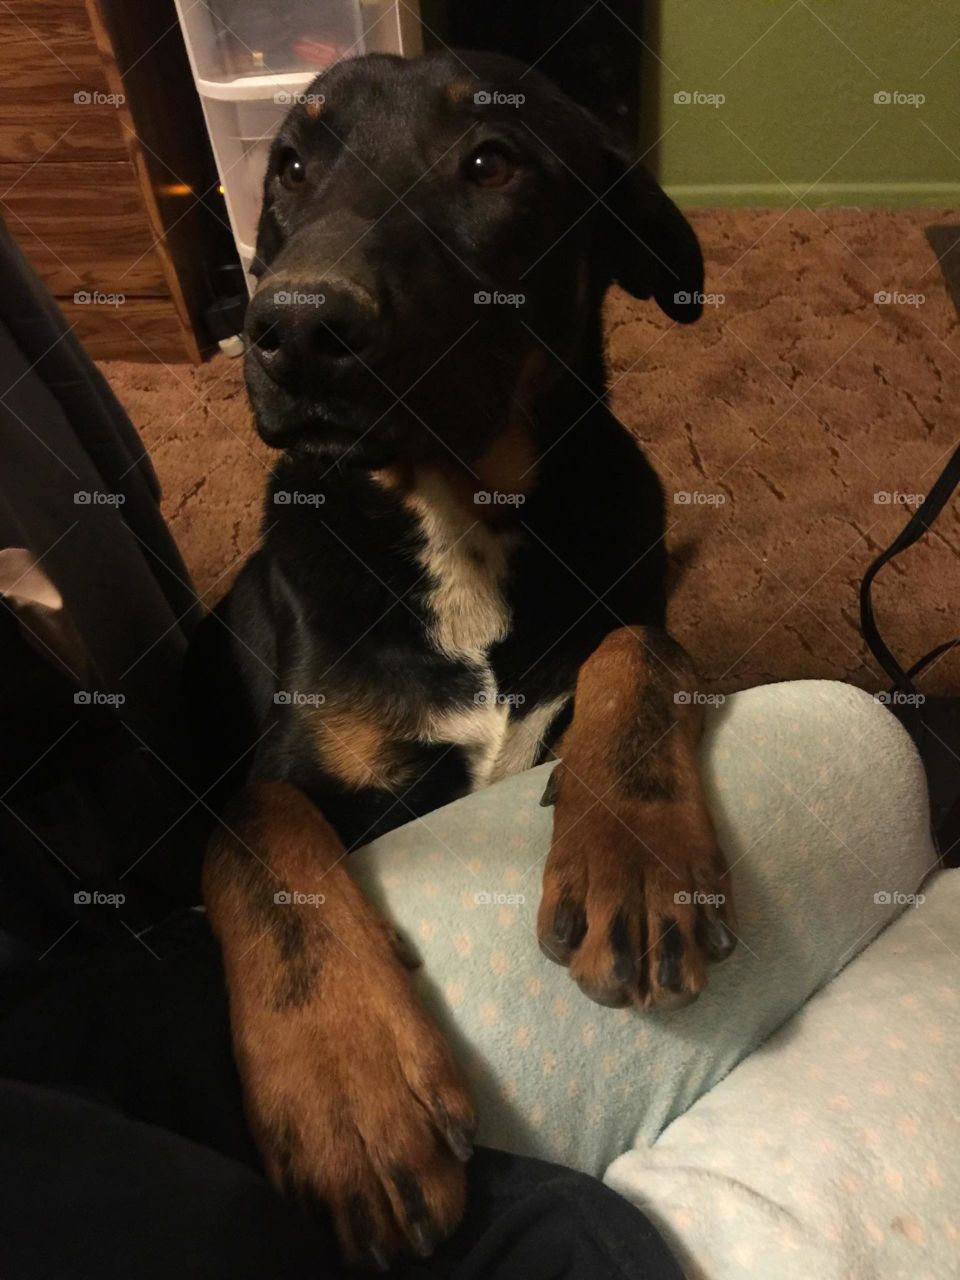 But Mom...I am a lap dog!